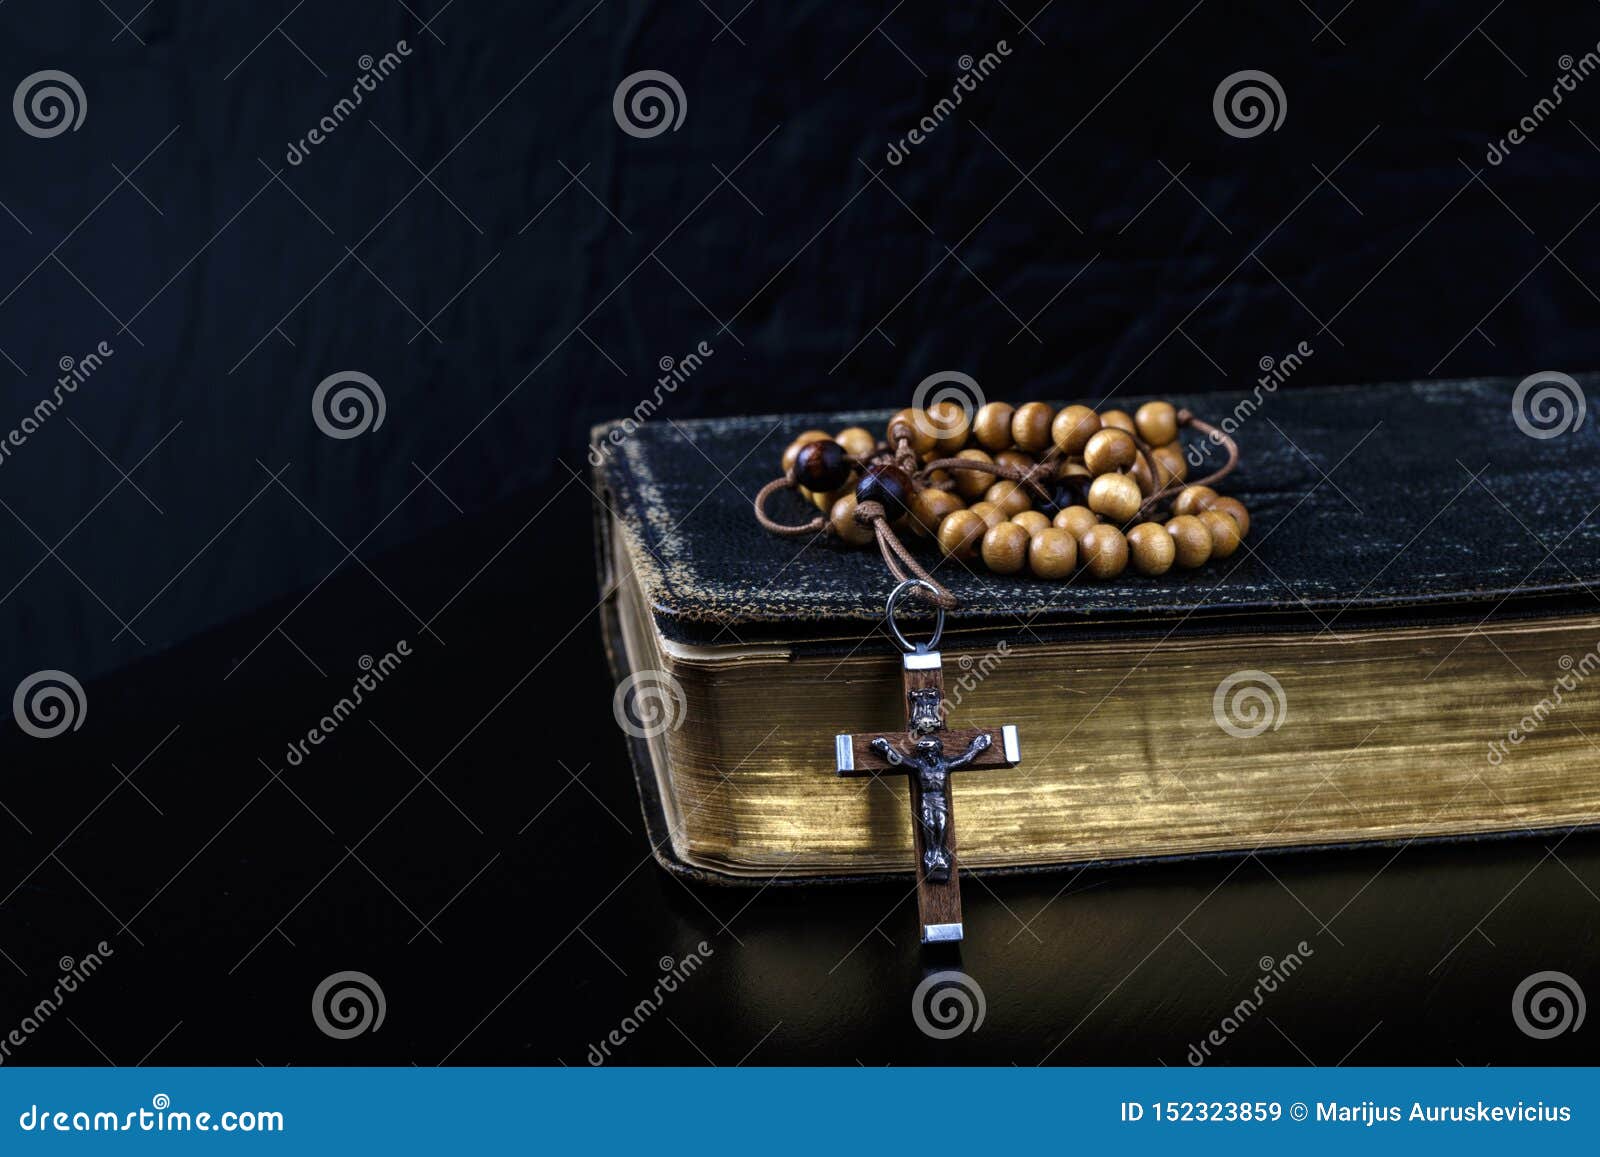 rosary beads and prayer book on dark background